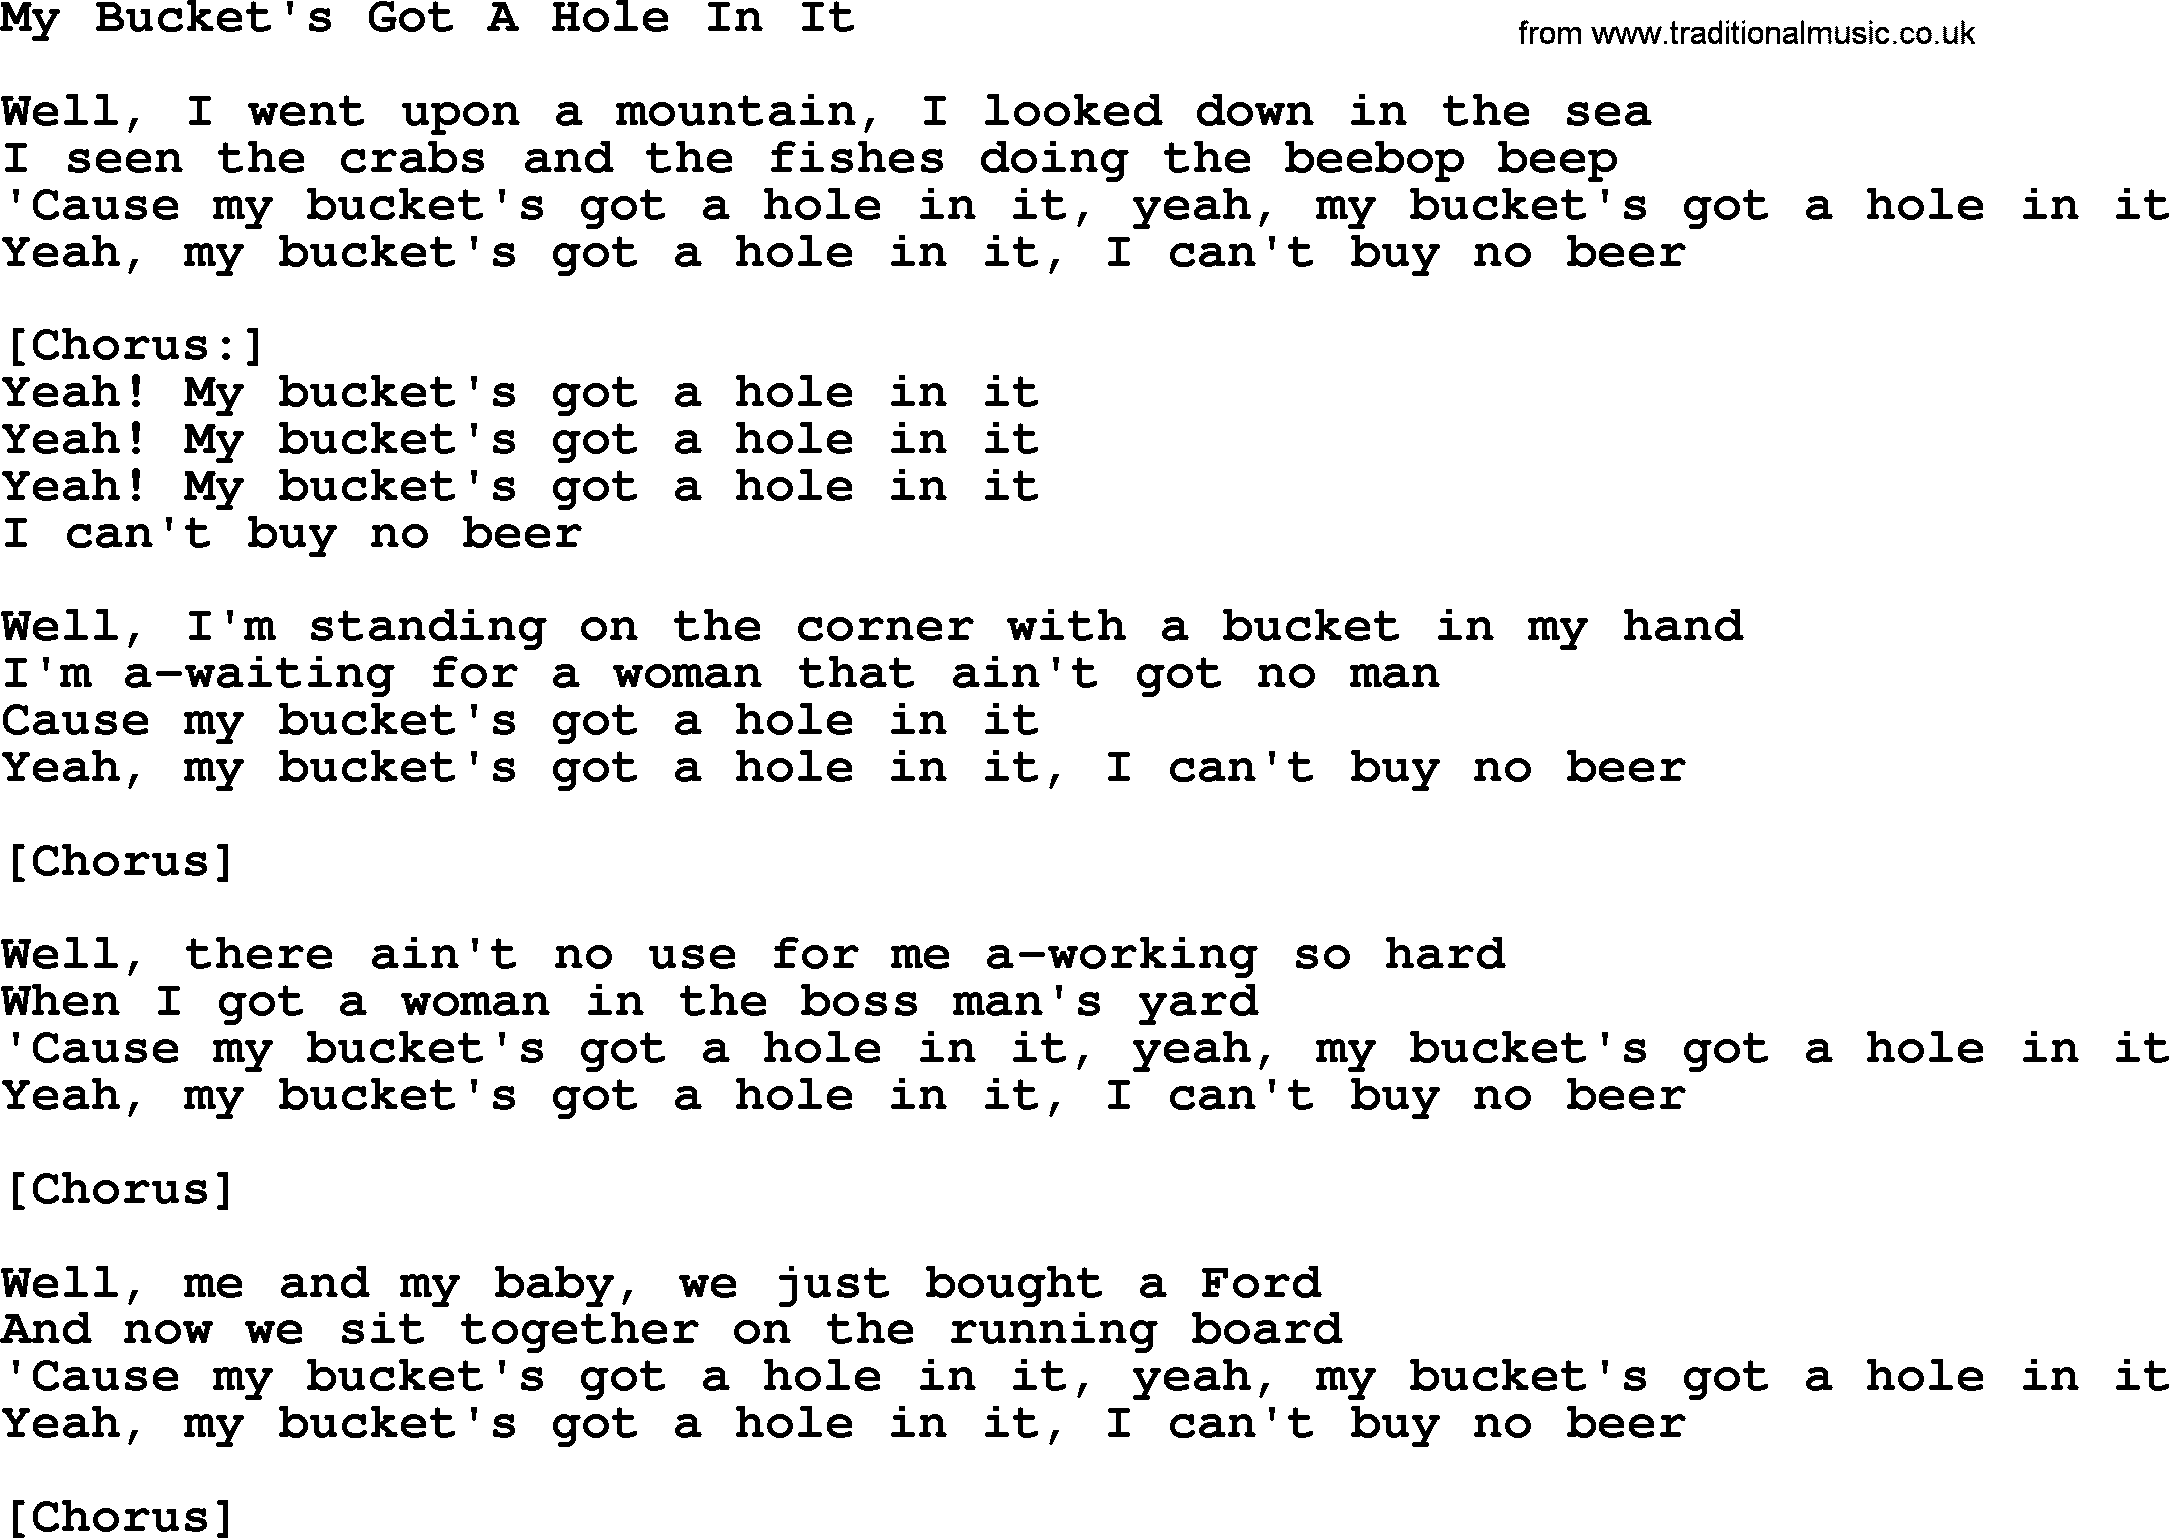 Willie Nelson song: My Bucket's Got A Hole In It lyrics